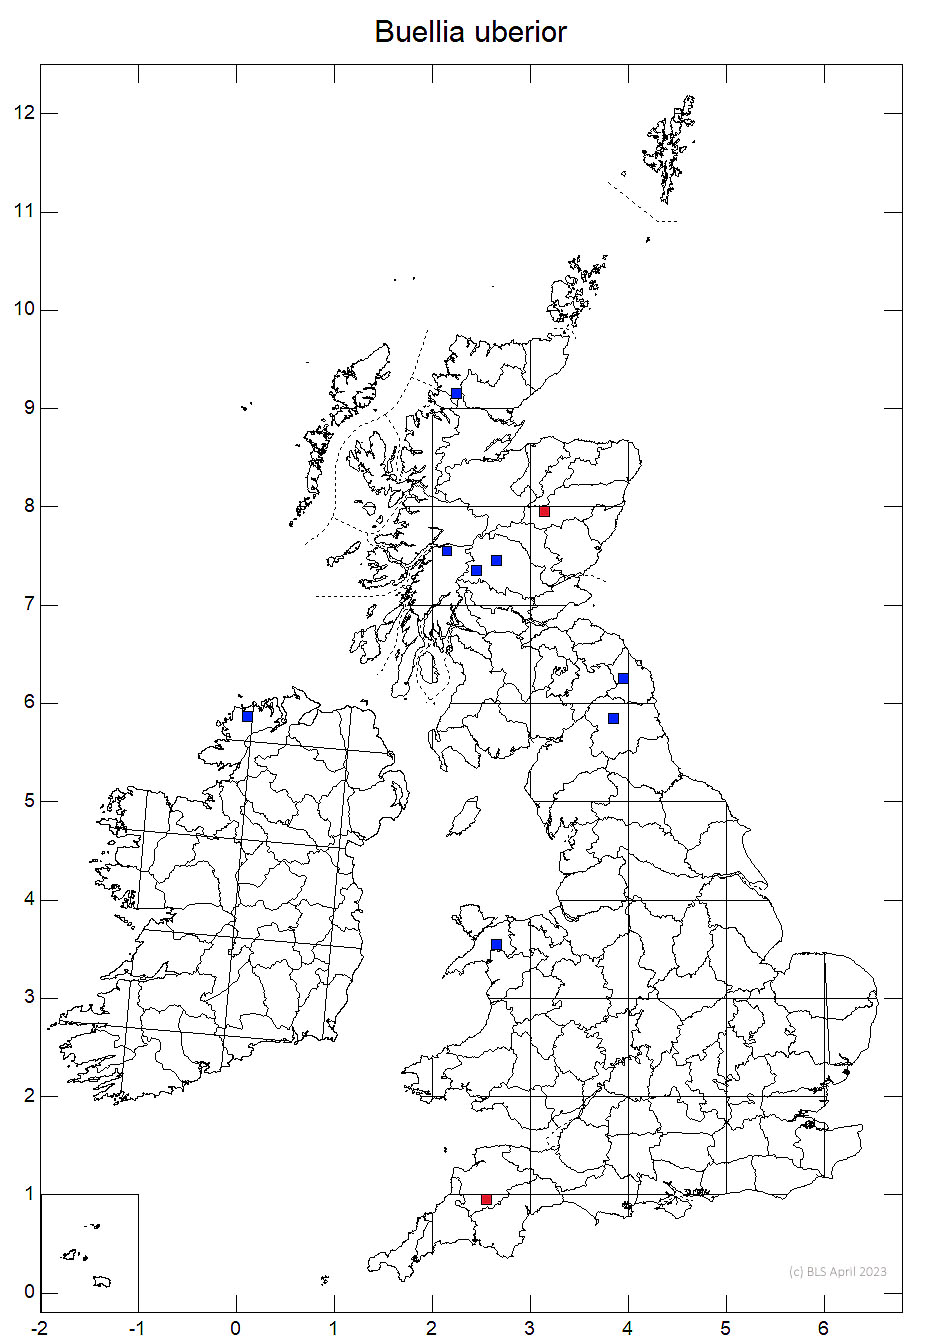 Buellia uberior 10km sq distribution map